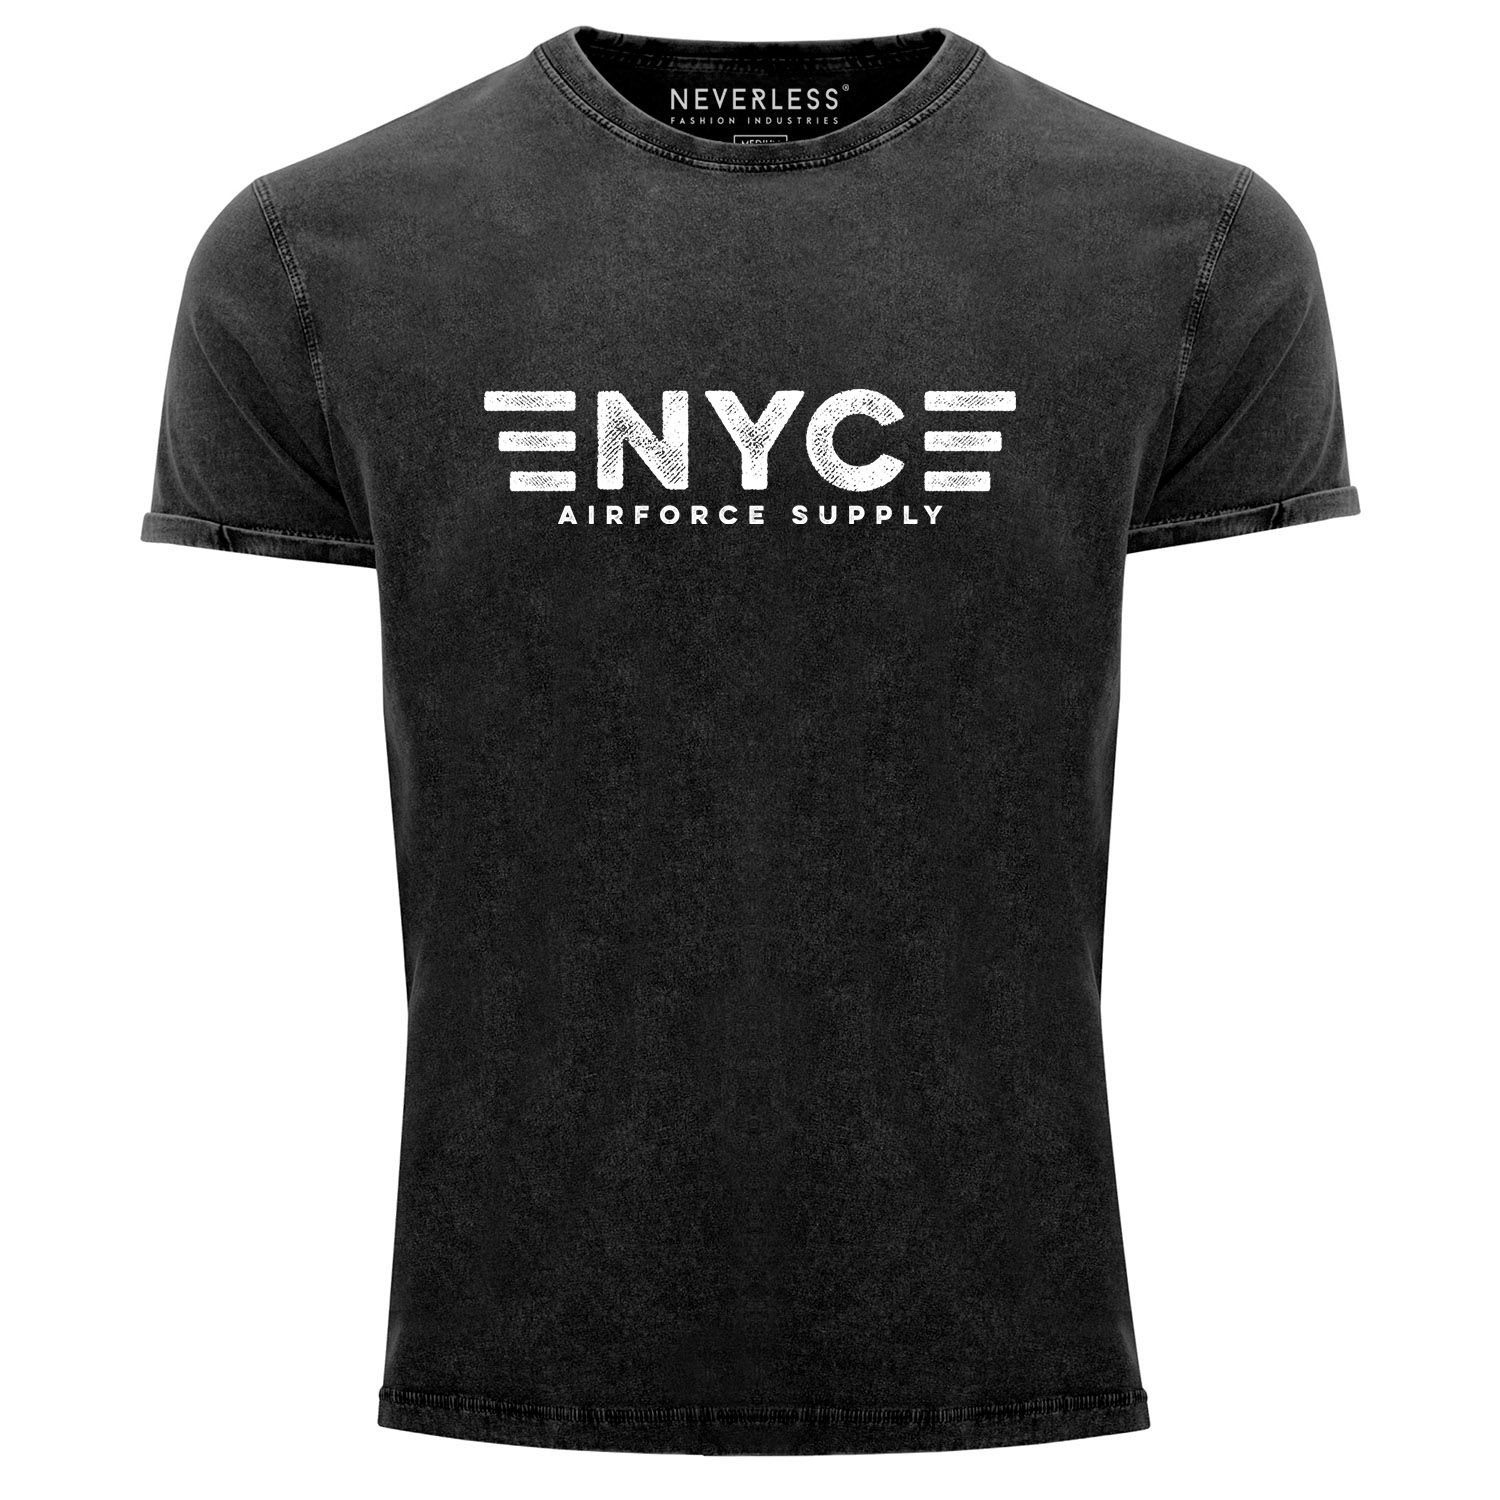 Neverless Print-Shirt Herren Vintage Shirt Aufdruck NYC New York City Airforce Supply Print Printshirt T-Shirt Used Look Slim Fit Neverless® mit Print schwarz